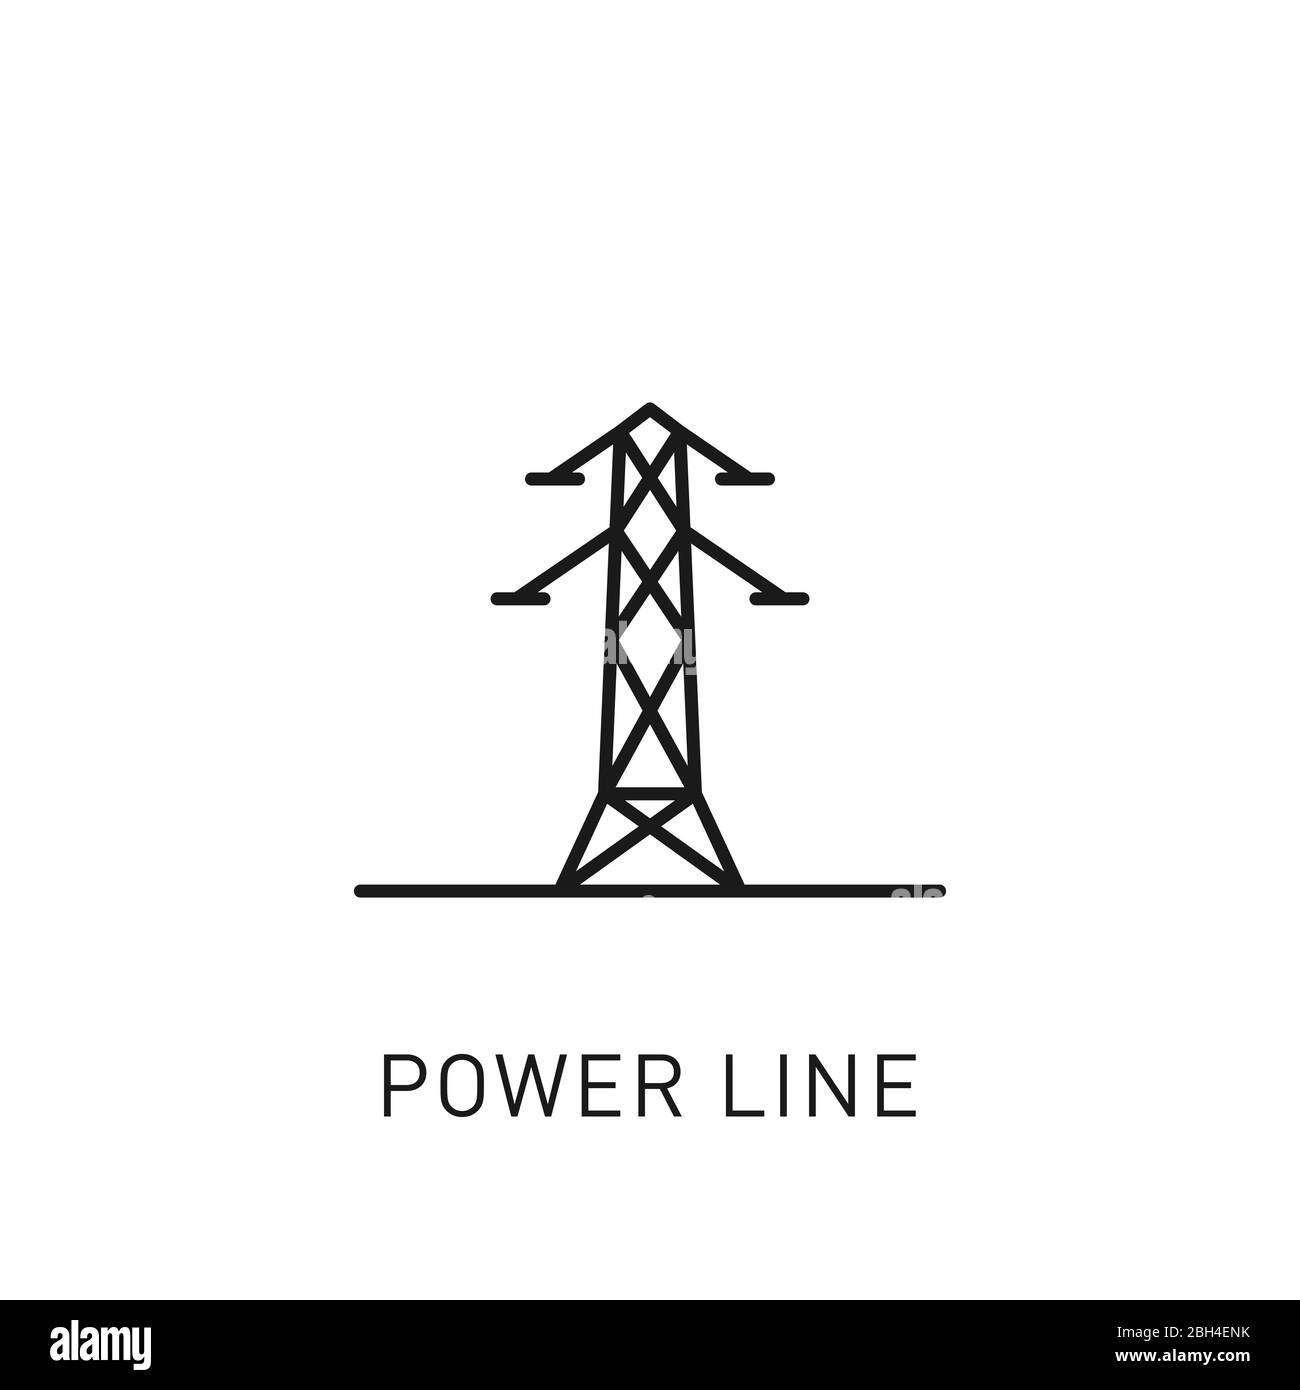 Power line thin line icon. Design element for renewable energy, green technology. Vector illustration. Stock Vector